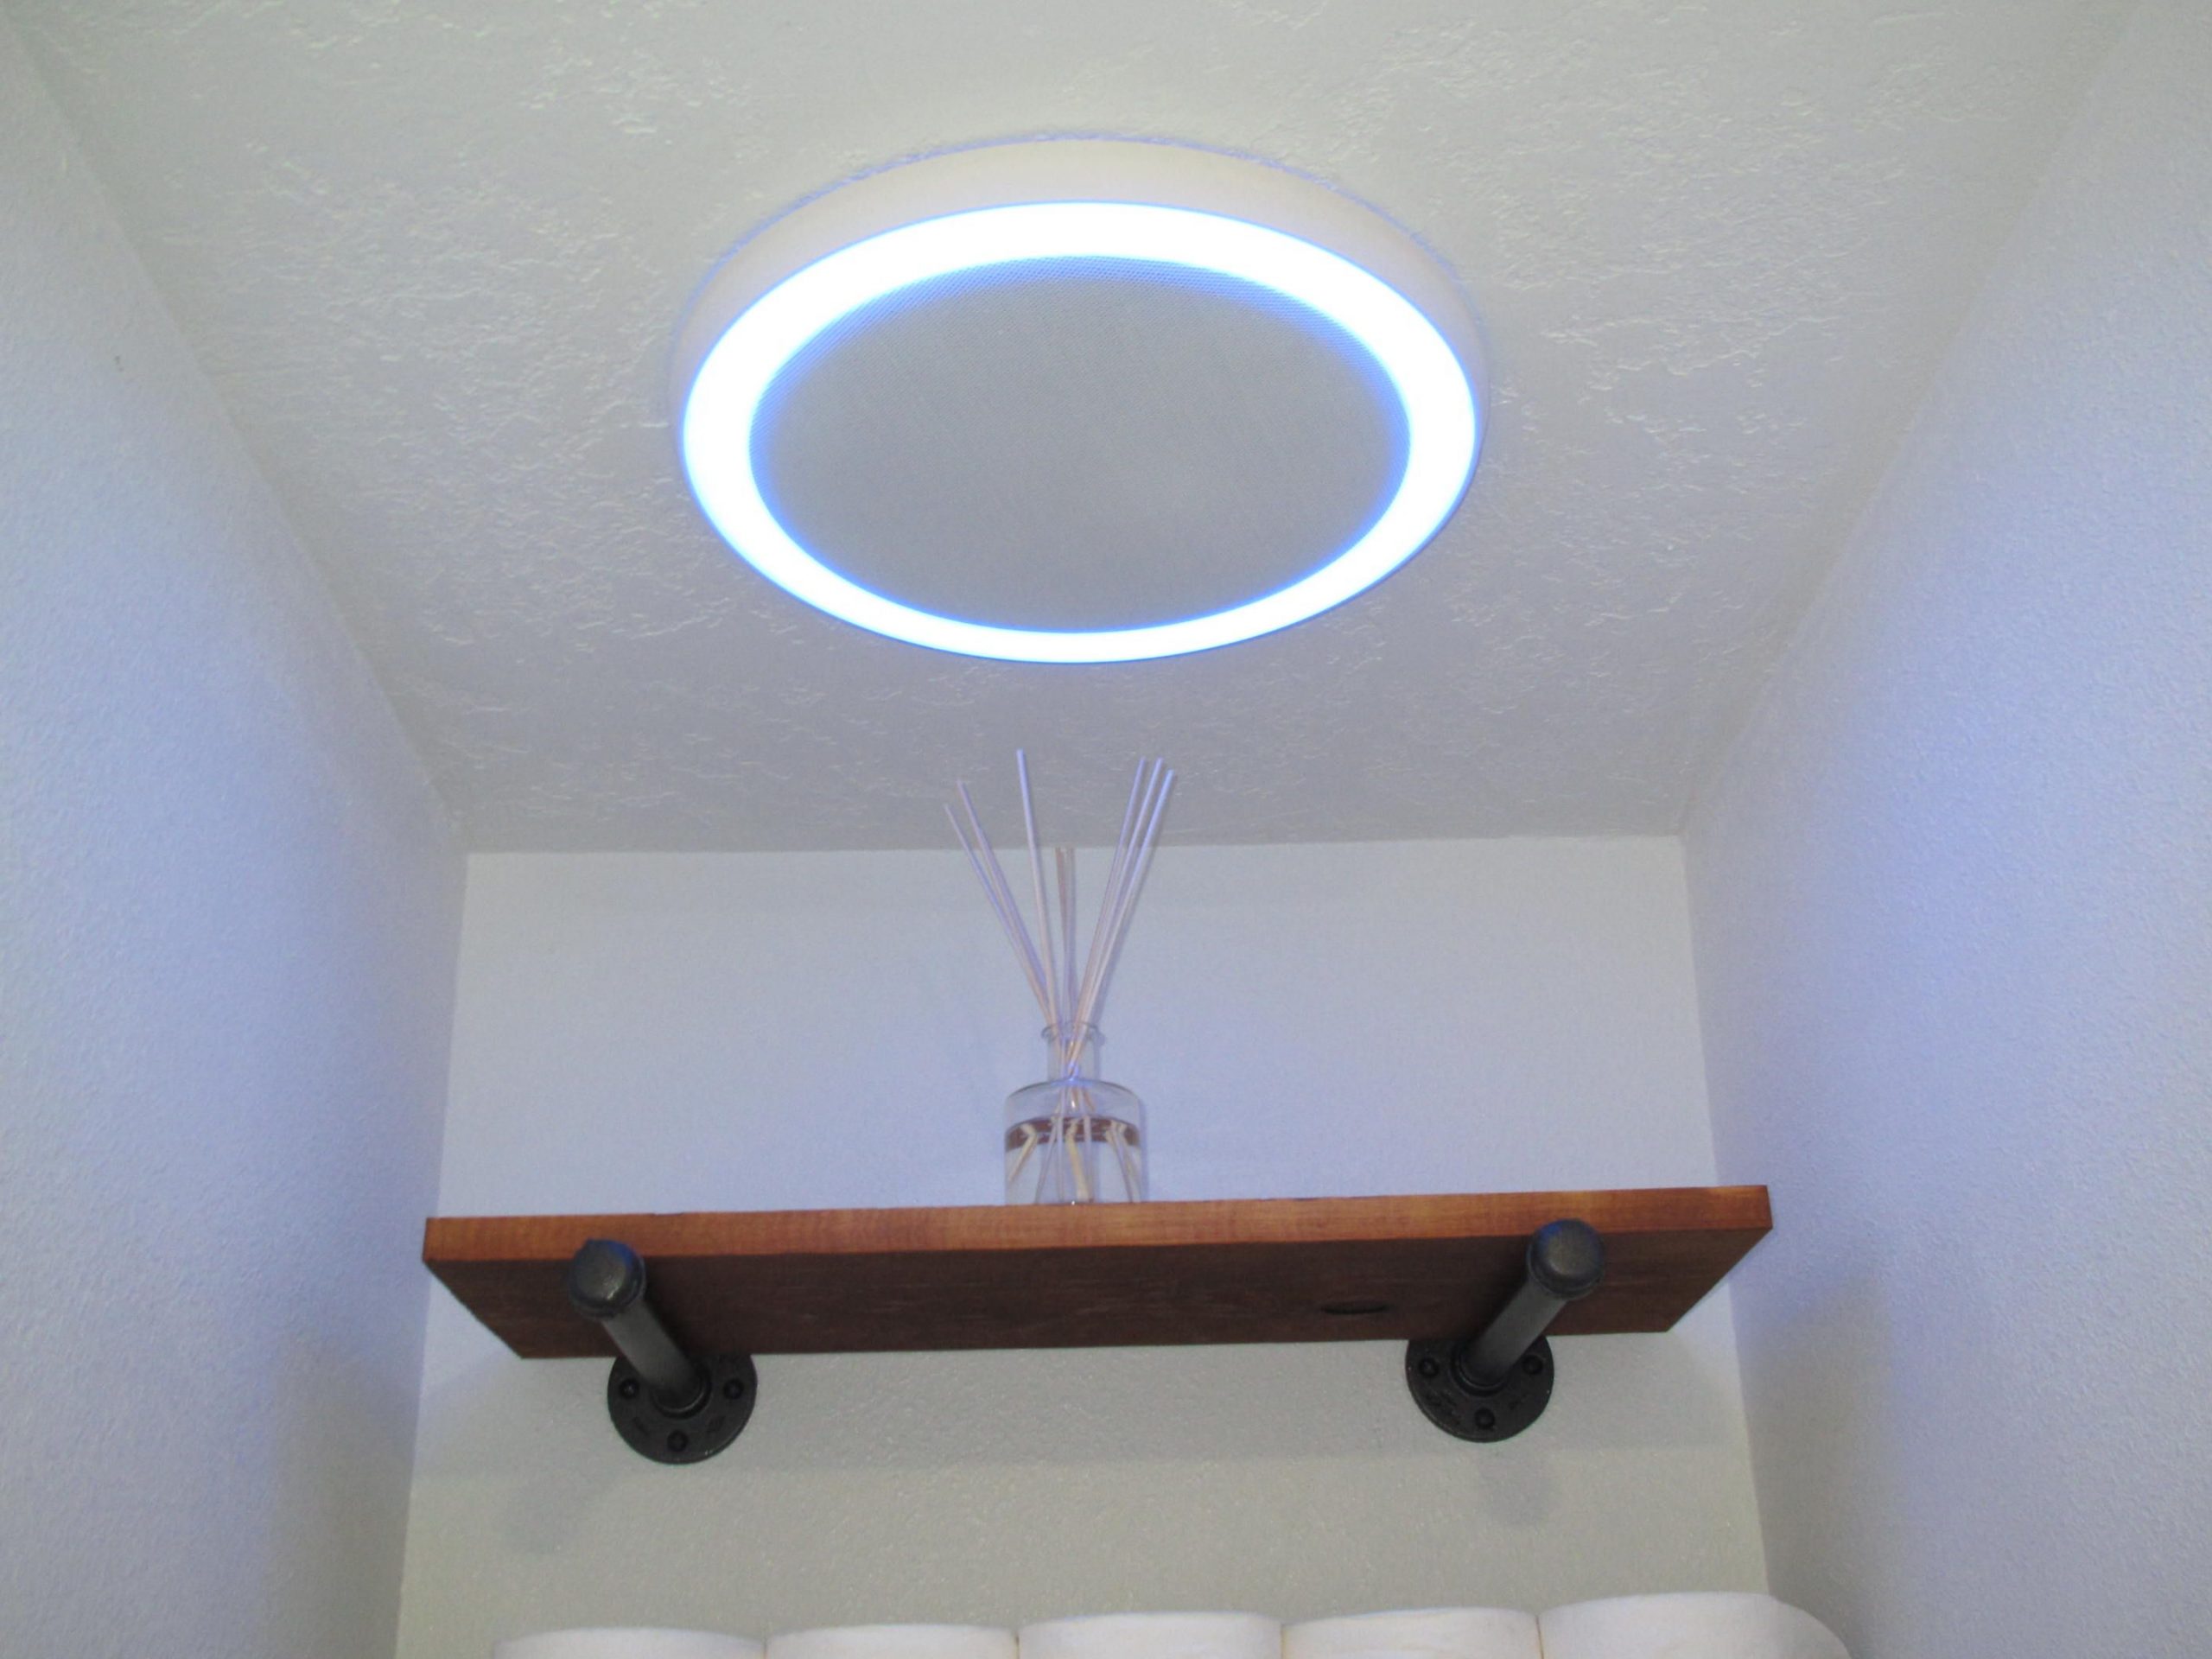 Bathroom Fan Wbluetooth Speaker Light And Blue Nightlight intended for sizing 2816 X 2112